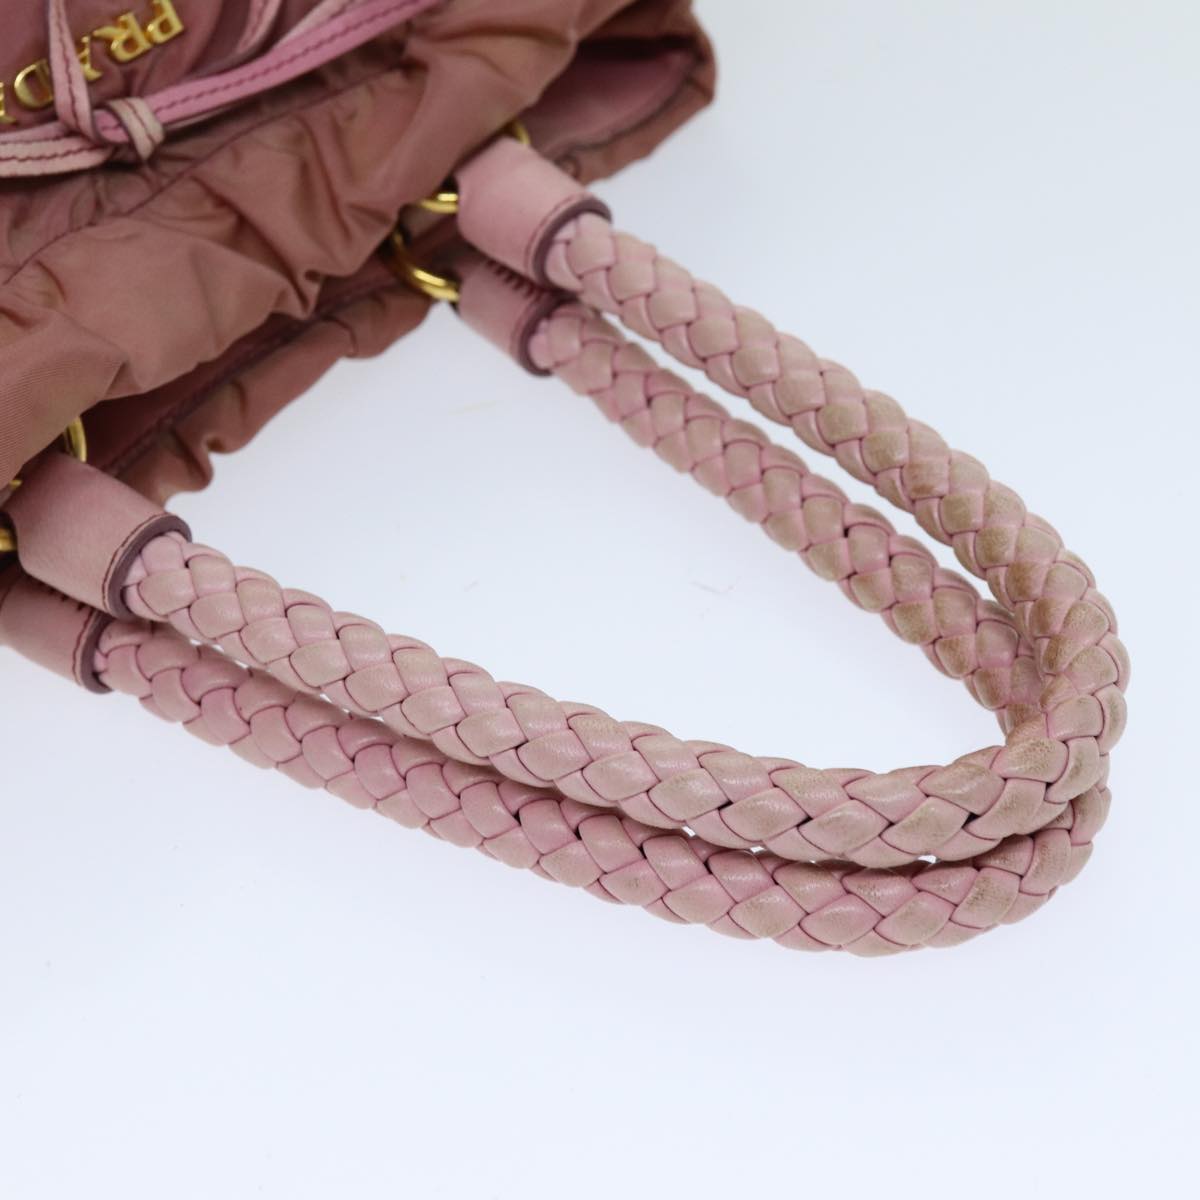 PRADA Hand Bag Nylon 2way Pink Auth 75584